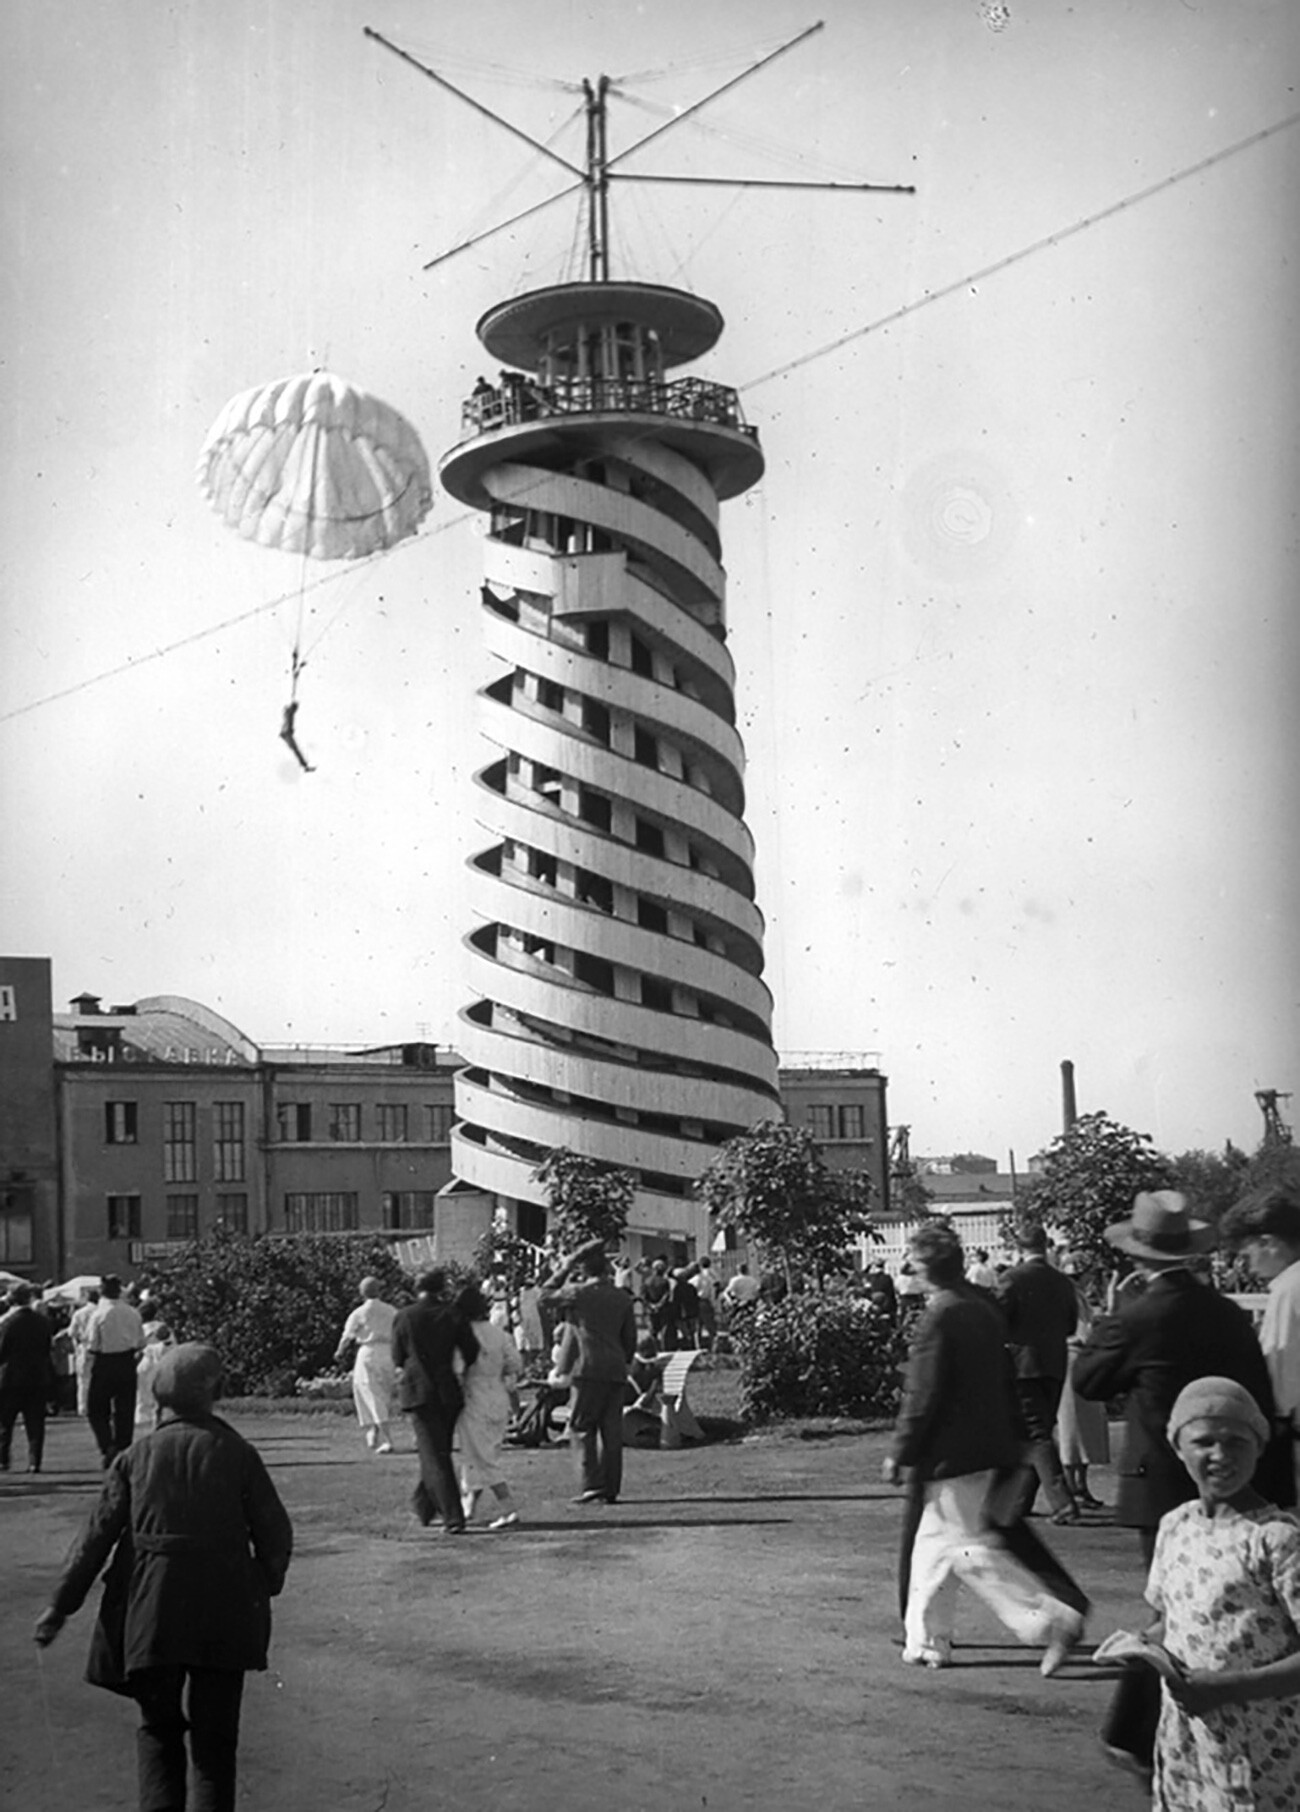 Torre de paracaídas en el Parque Gorki, 1955
